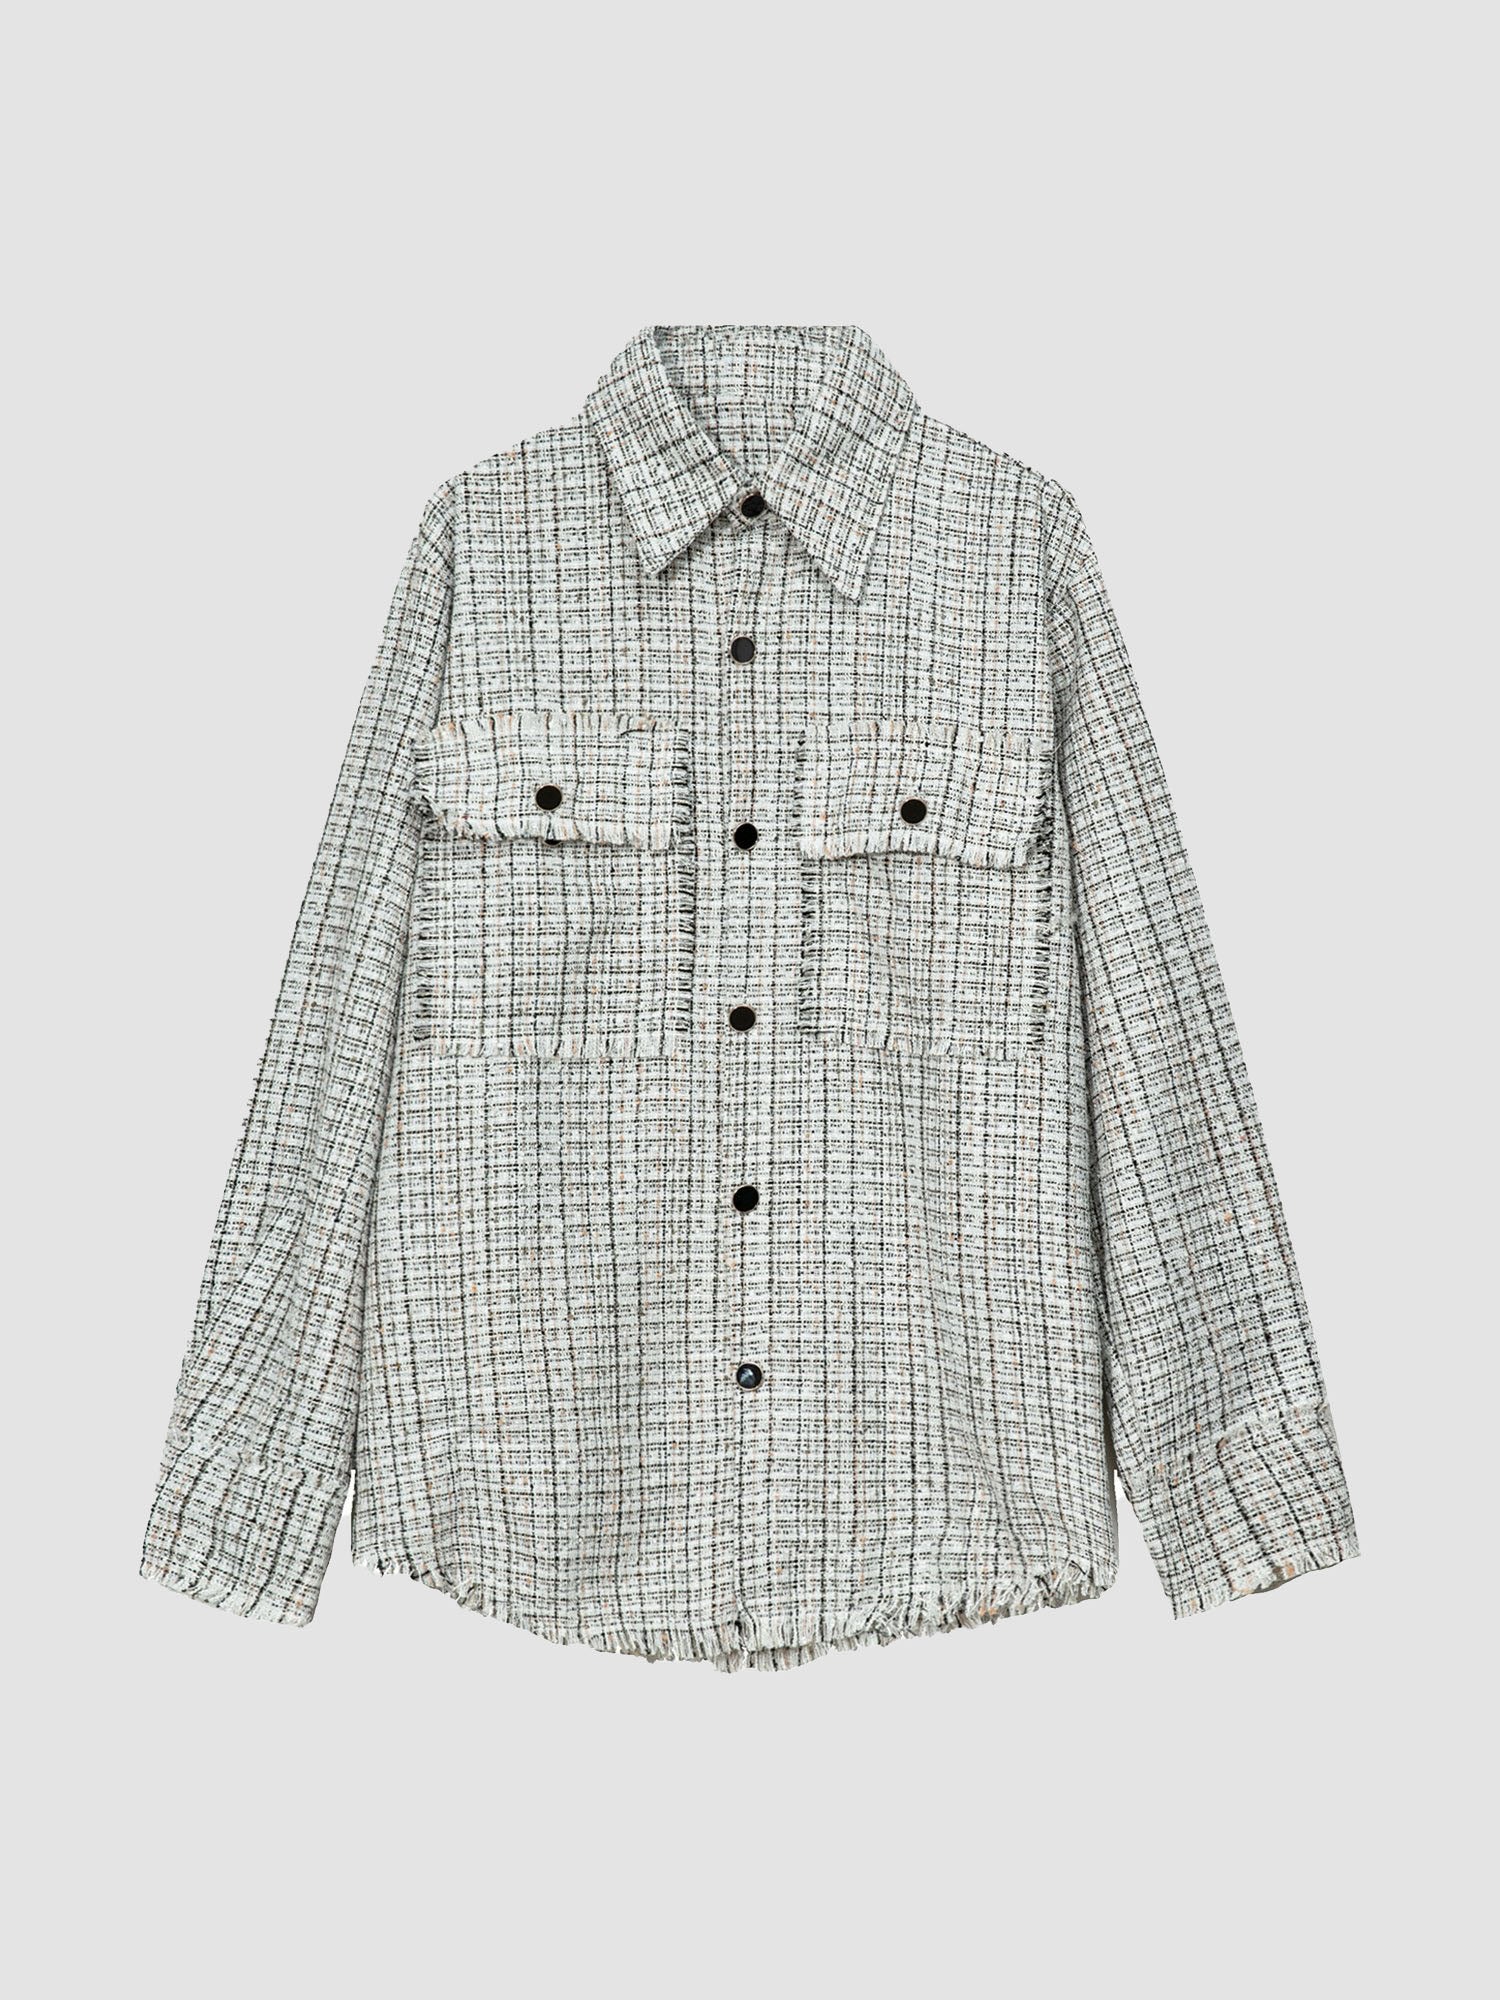 JUSTNOTAG Fashion Plaid Polyester Turn-down Collar Shirts